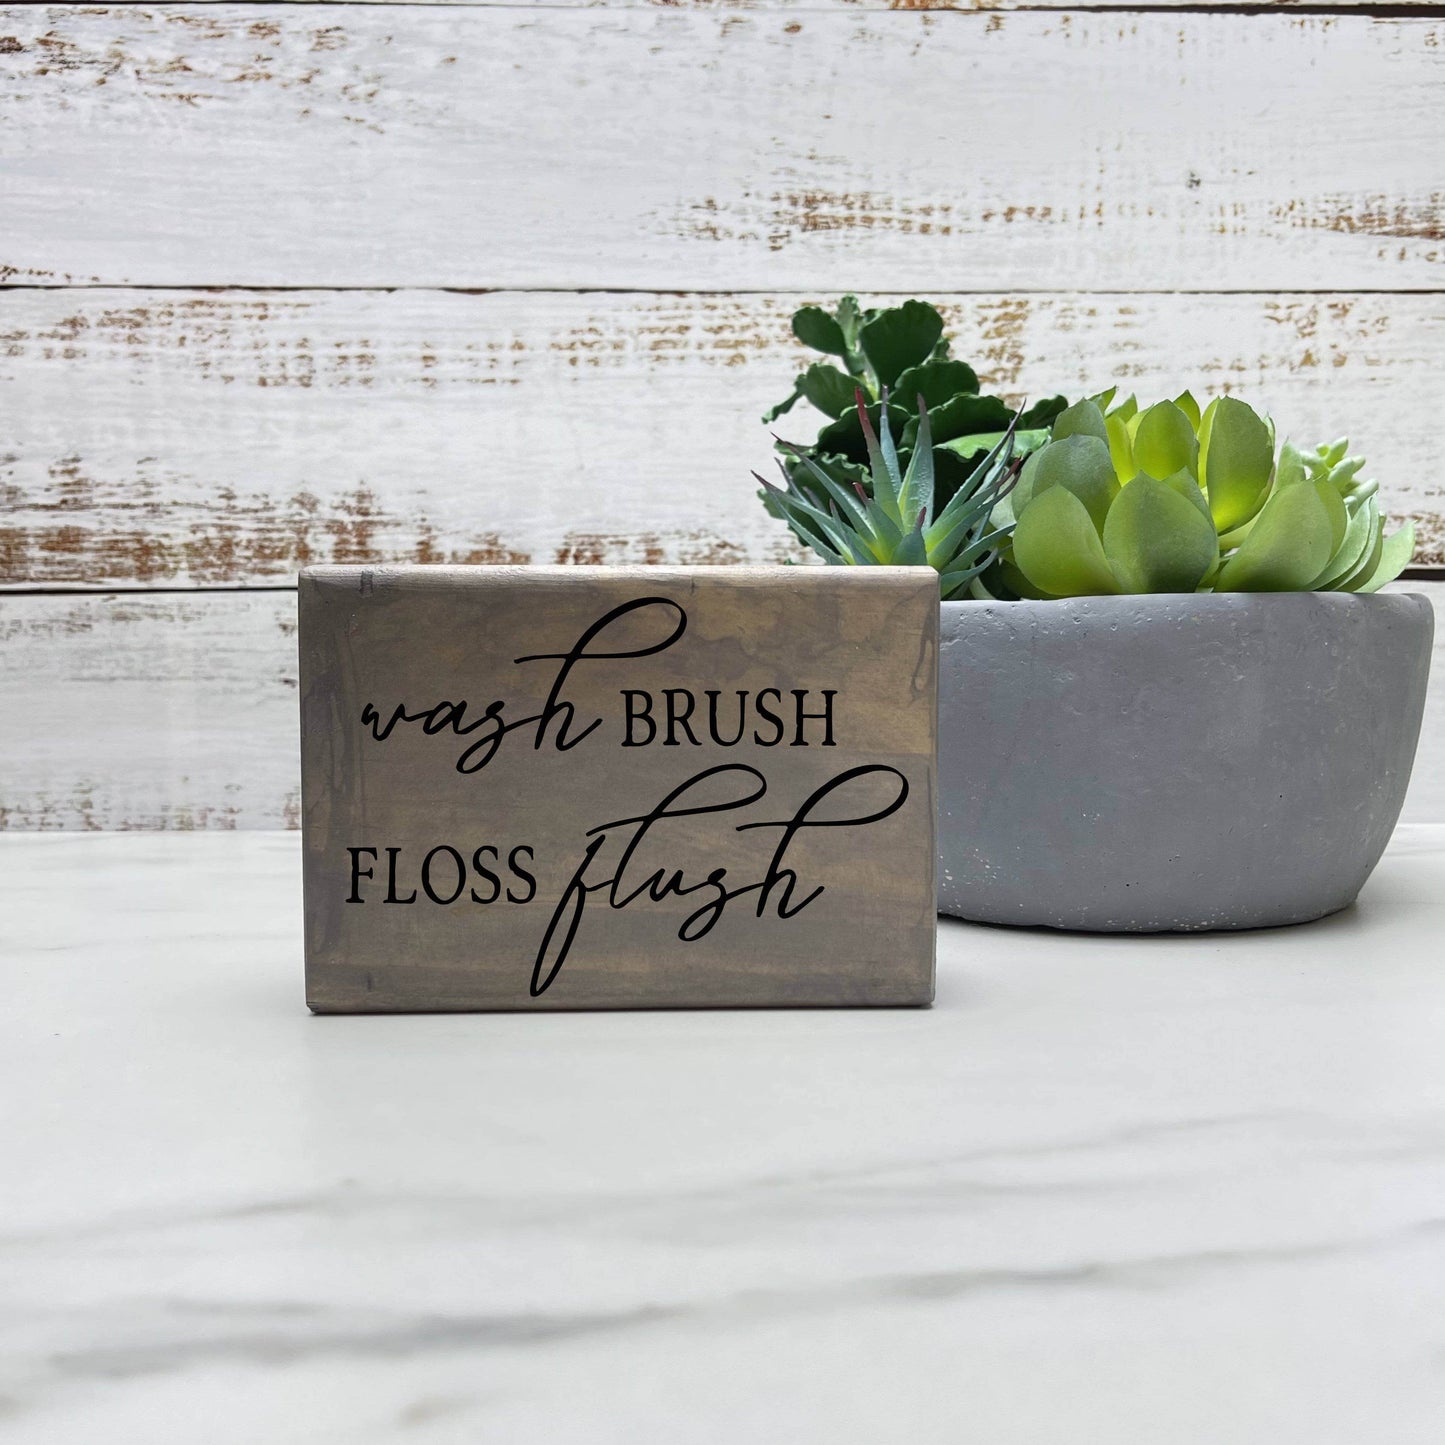 Wash Brush Floss Flush, Bathroom Wood Sign, Bathroom Decor, Home Decor